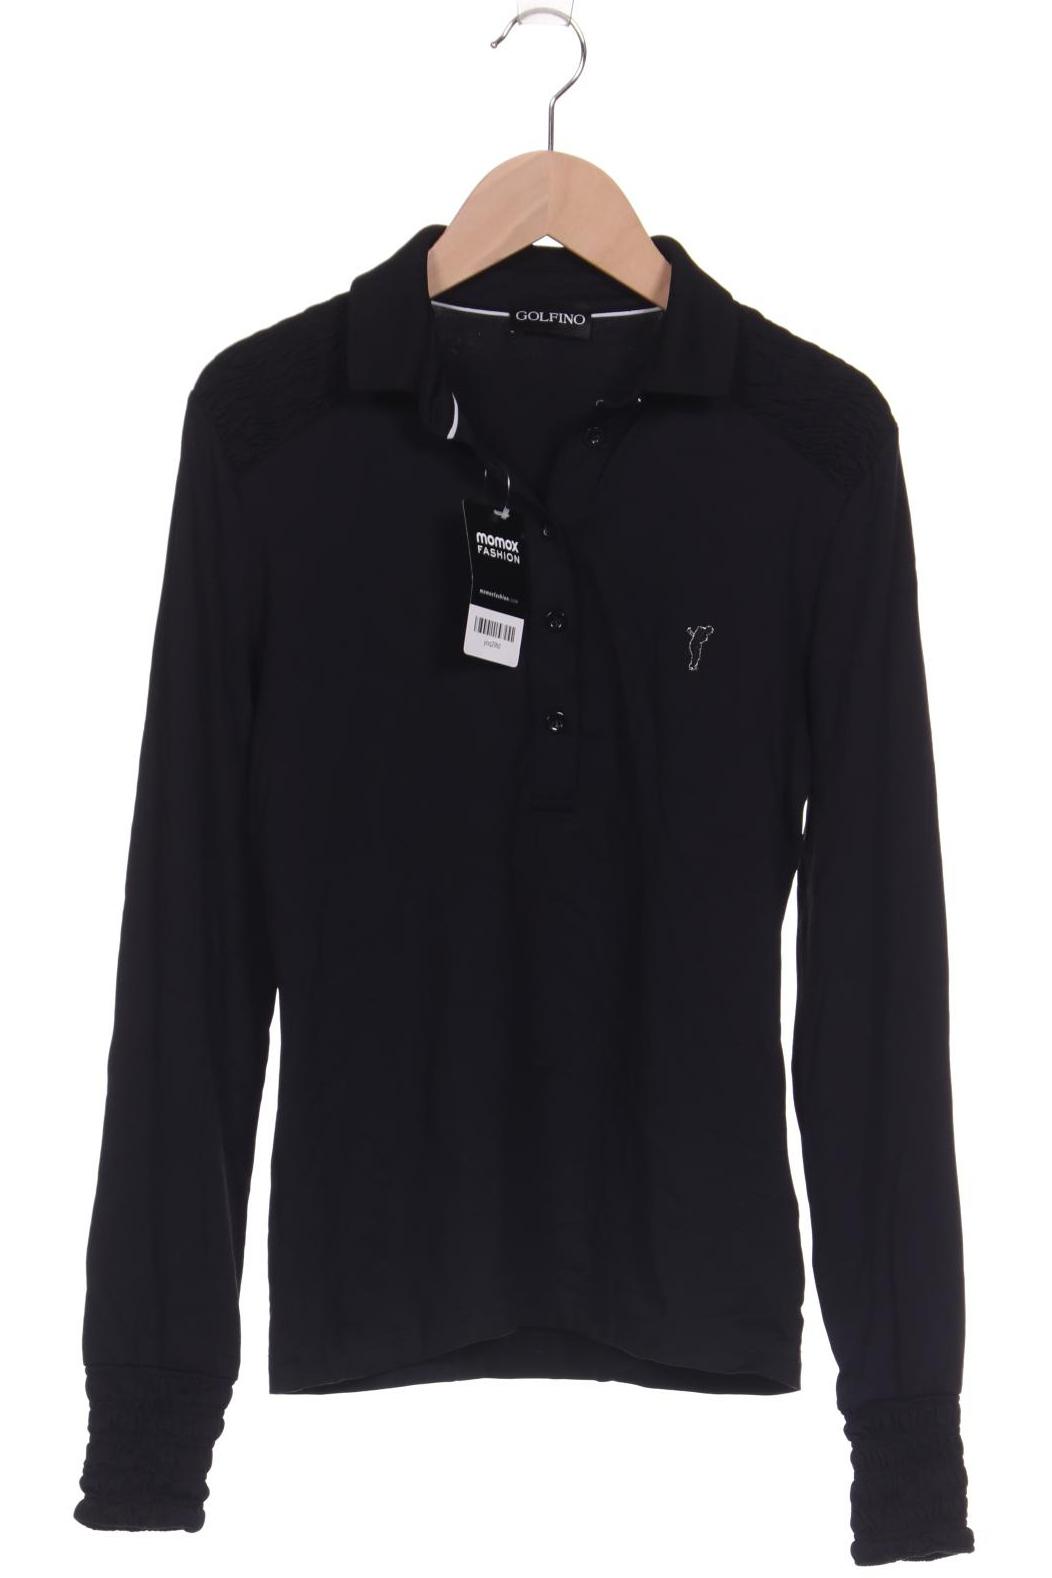 GOLFINO Damen Poloshirt, schwarz von Golfino